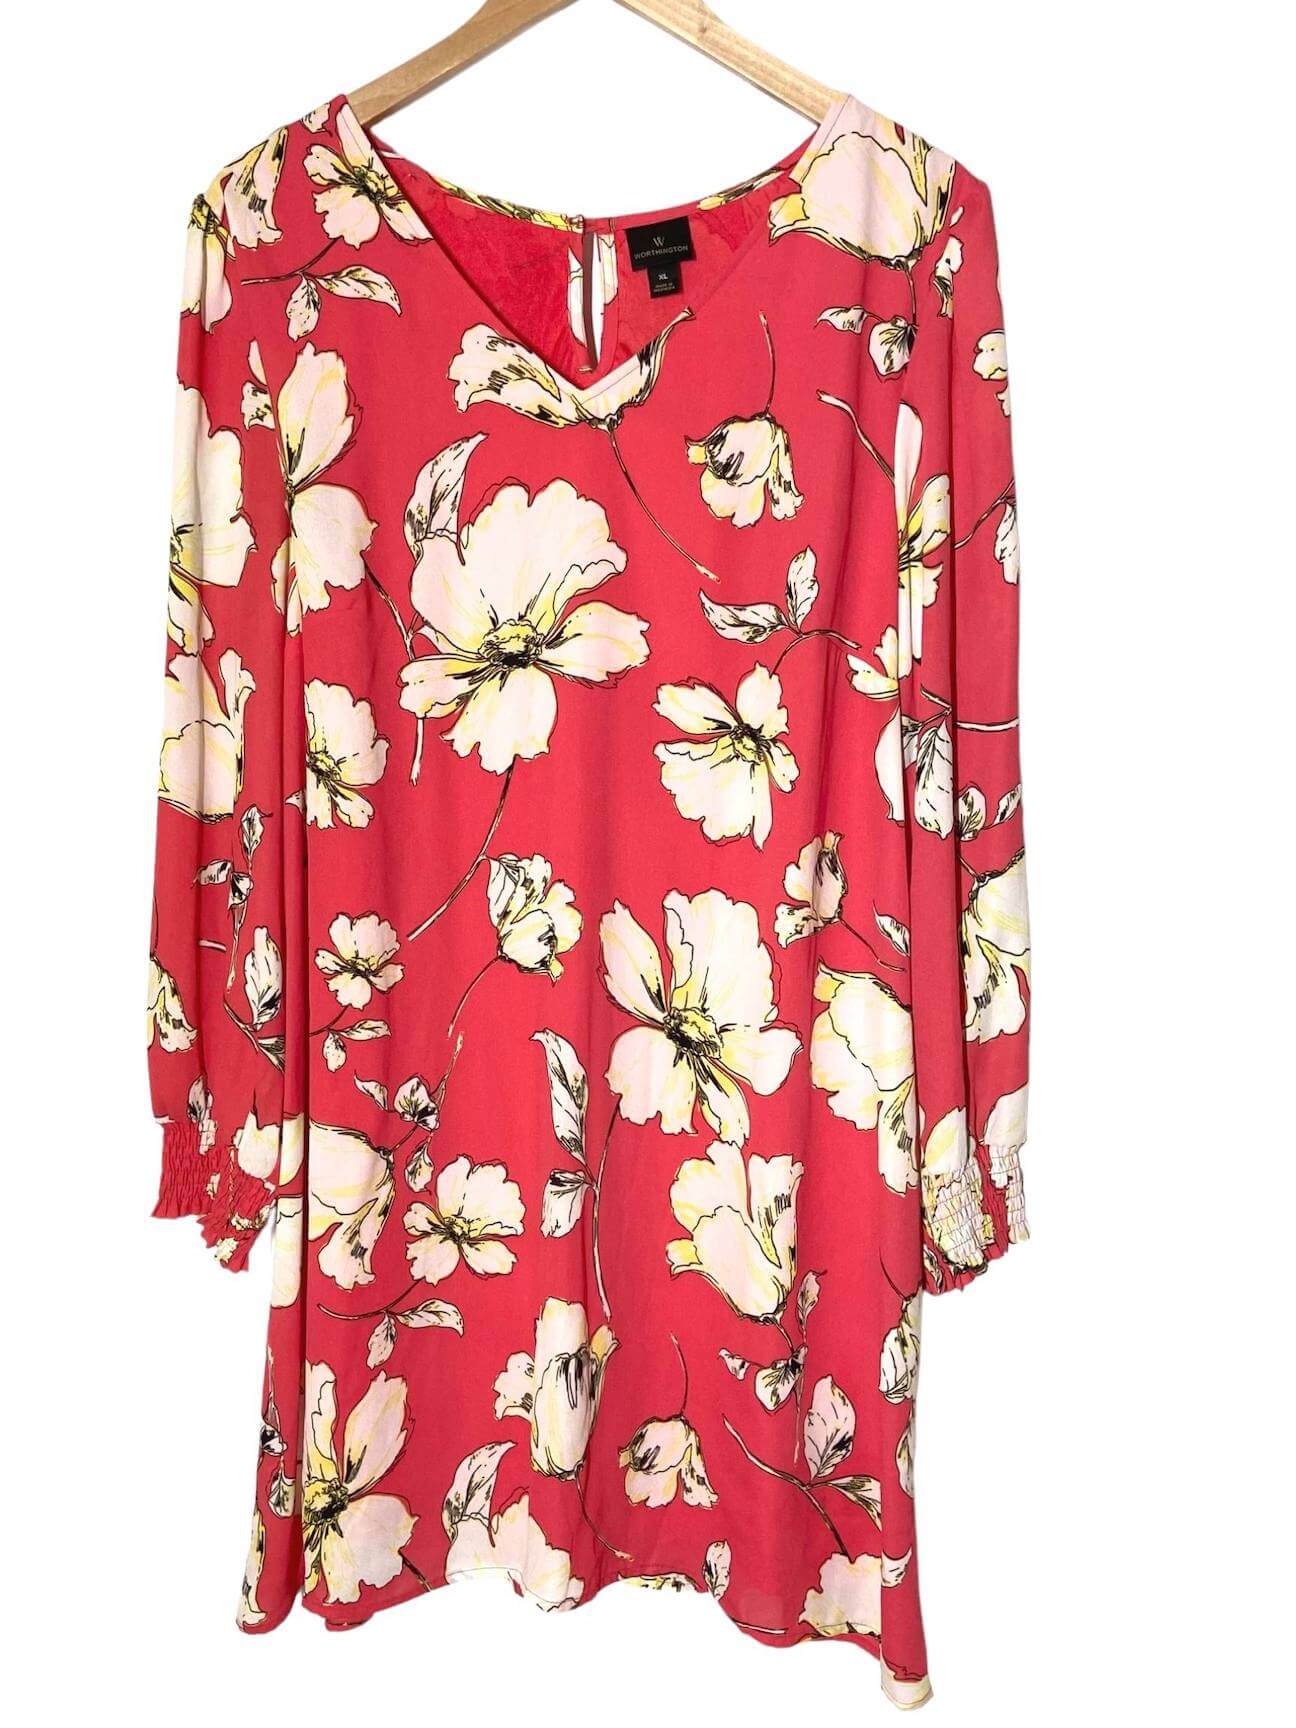 Warm Spring WORTHINGTON teaberry floral print dress